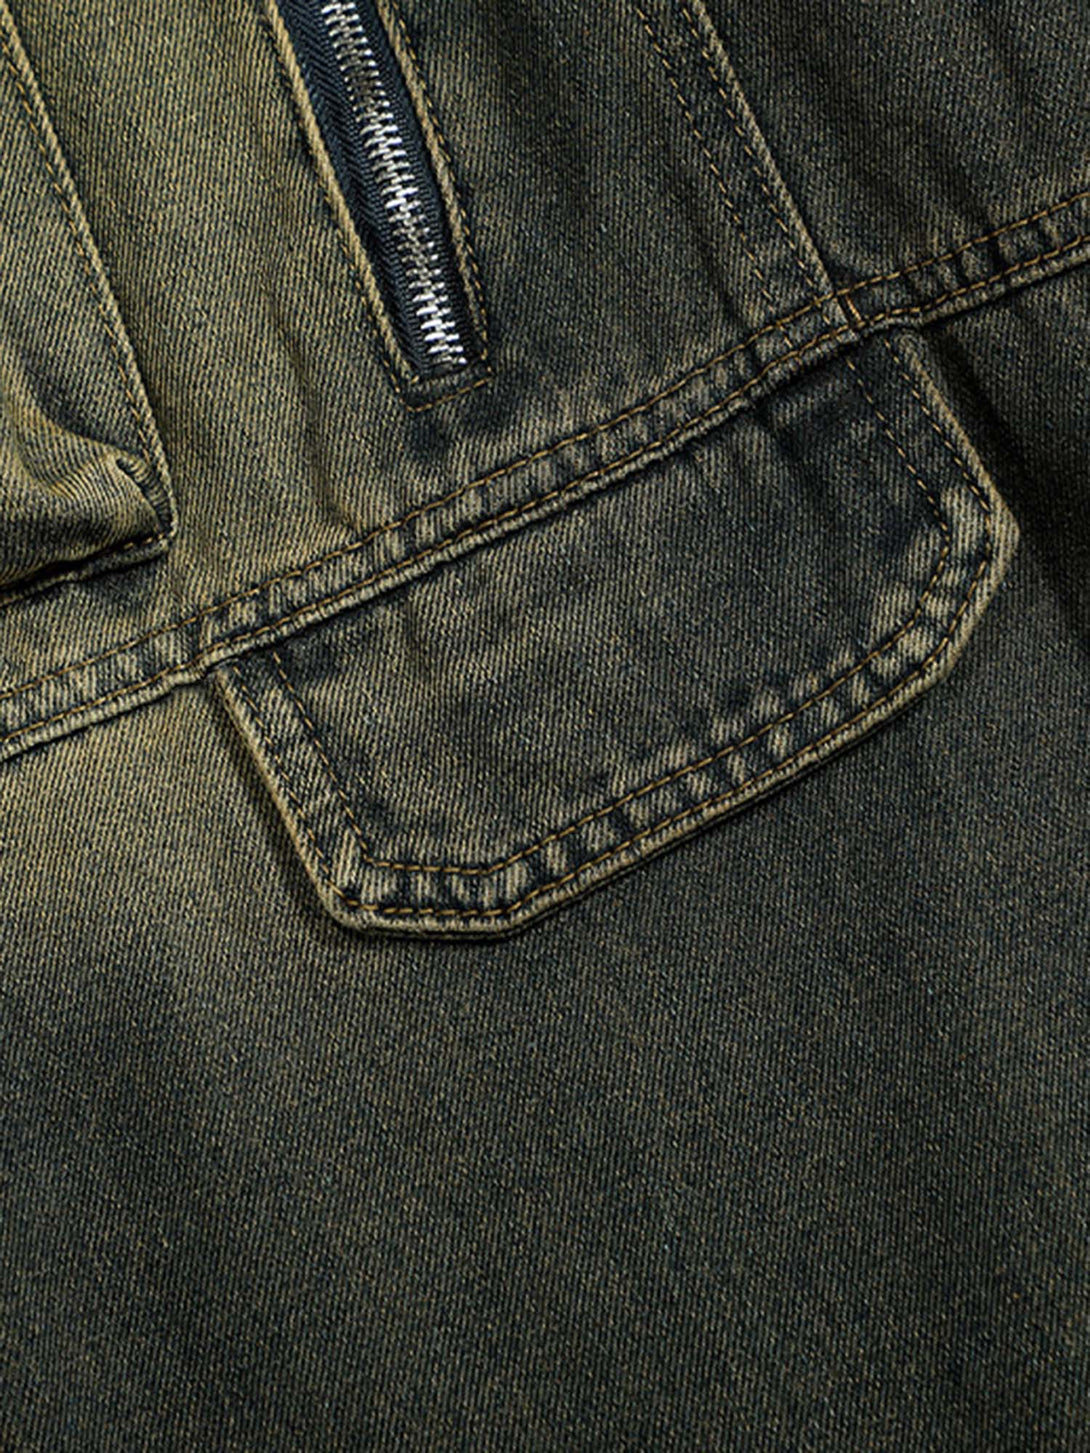 Majesda® - American Retro Multi-pocket Workwear Washed Jeans- Outfit Ideas - Streetwear Fashion - majesda.com